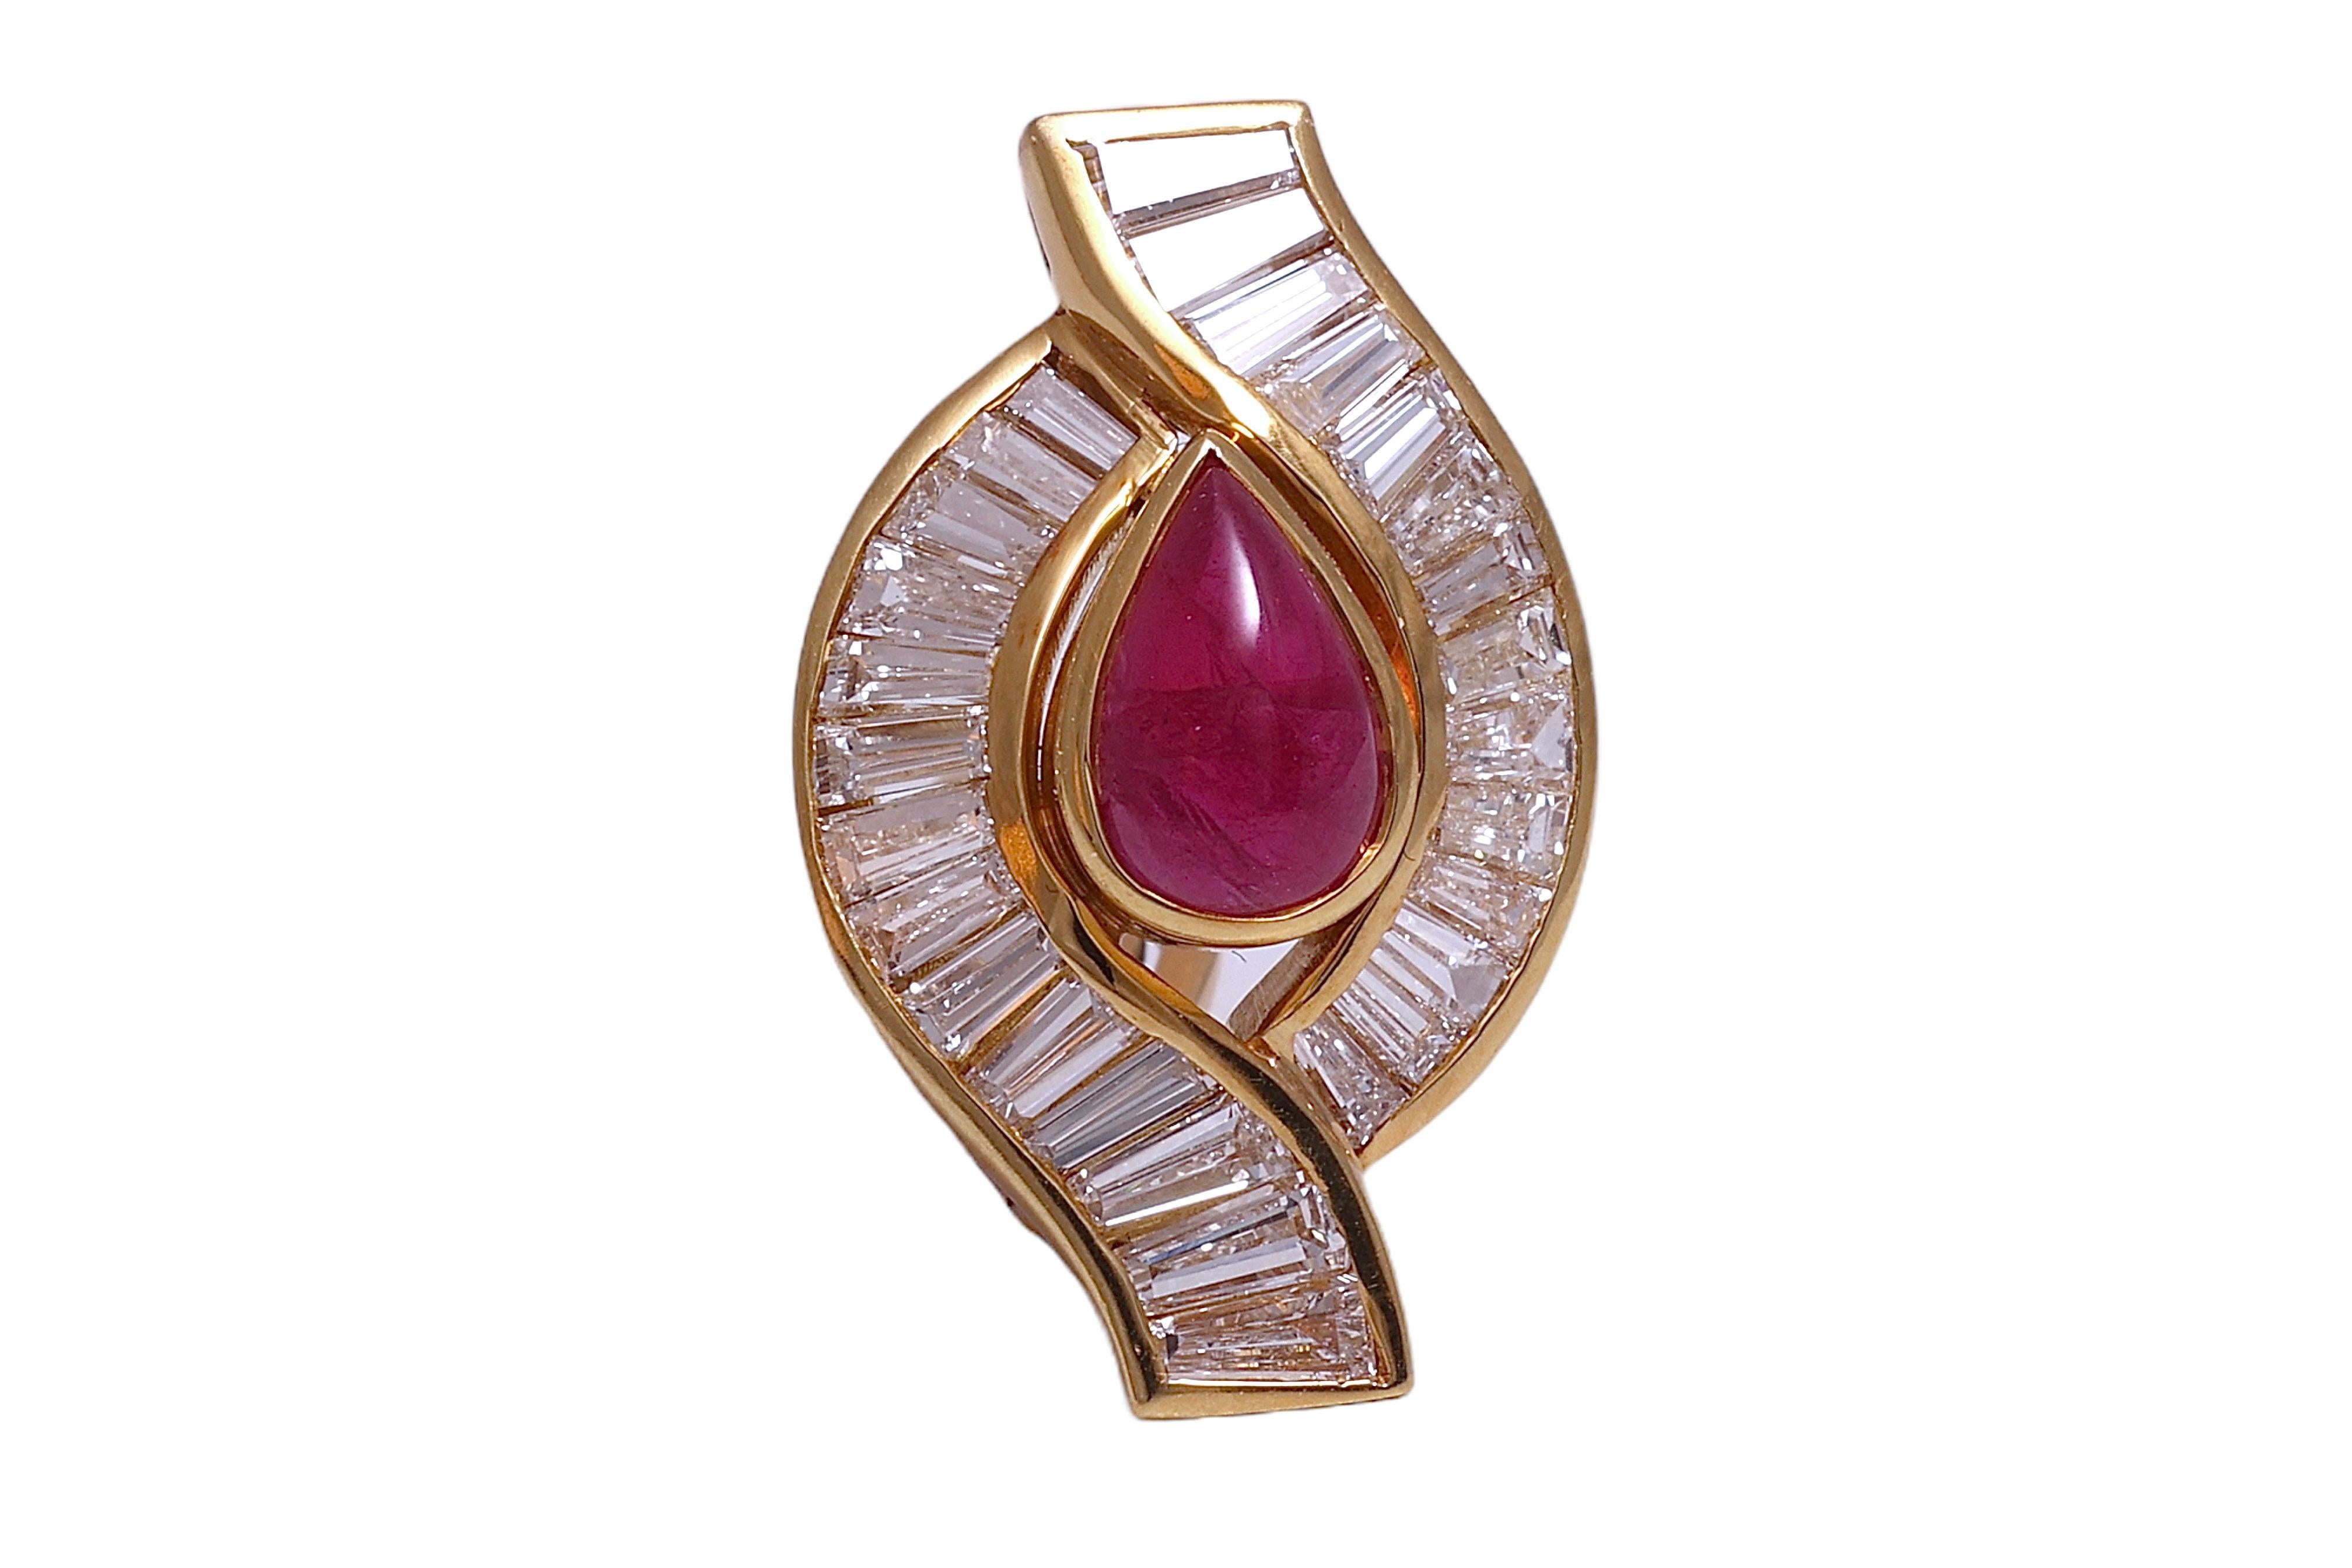 Cabochon Adler Clip - On Earrings 4ct Burma NH Ruby & Diamonds, GRS, Estate Sultan Oman For Sale